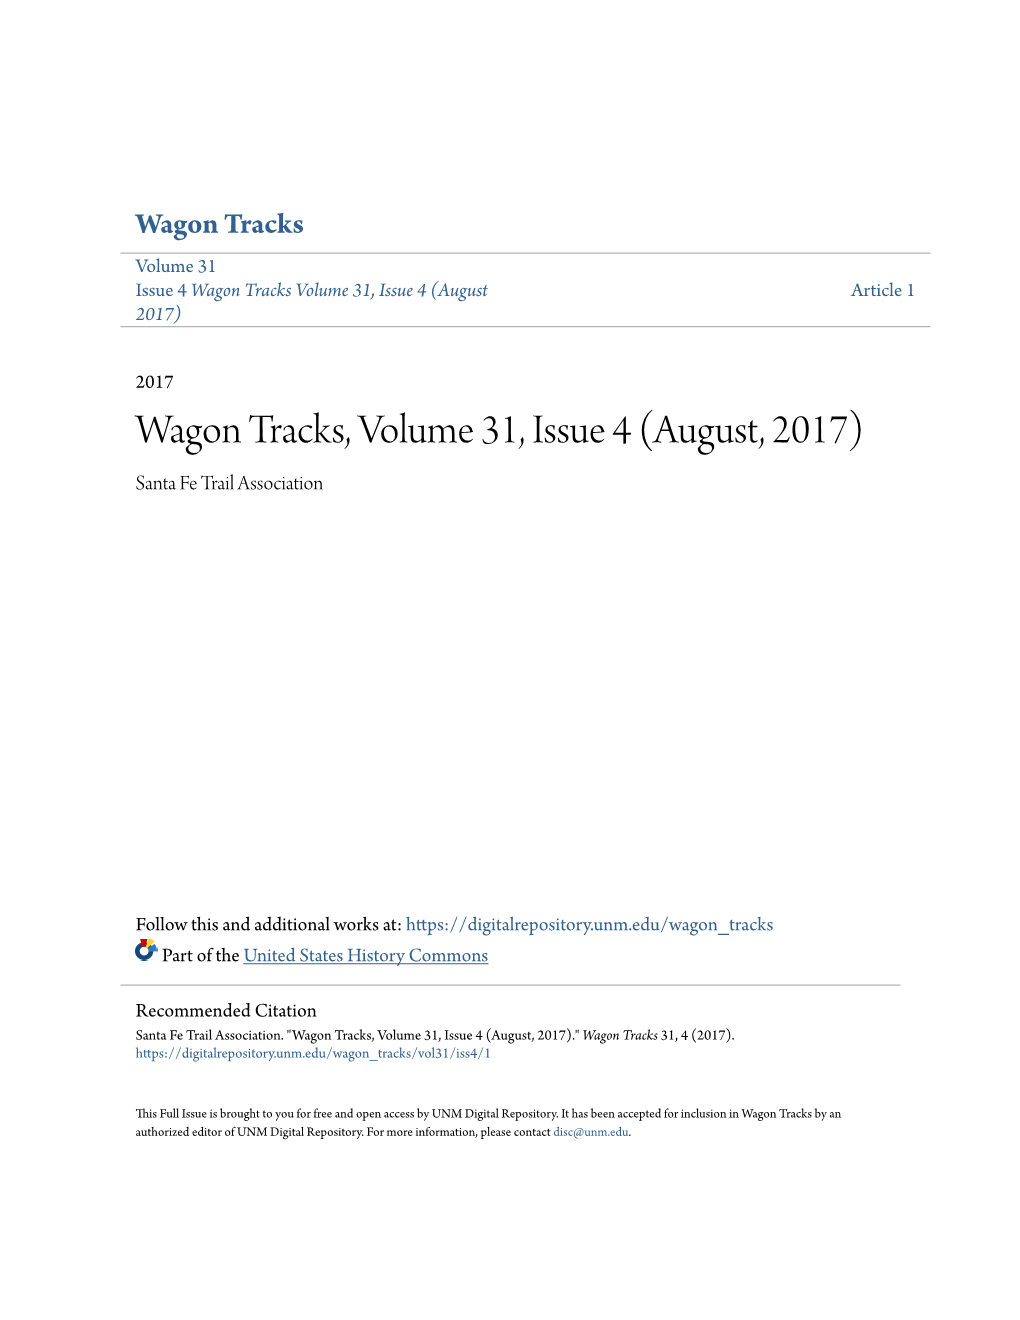 Wagon Tracks, Volume 31, Issue 4 (August, 2017) Santa Fe Trail Association